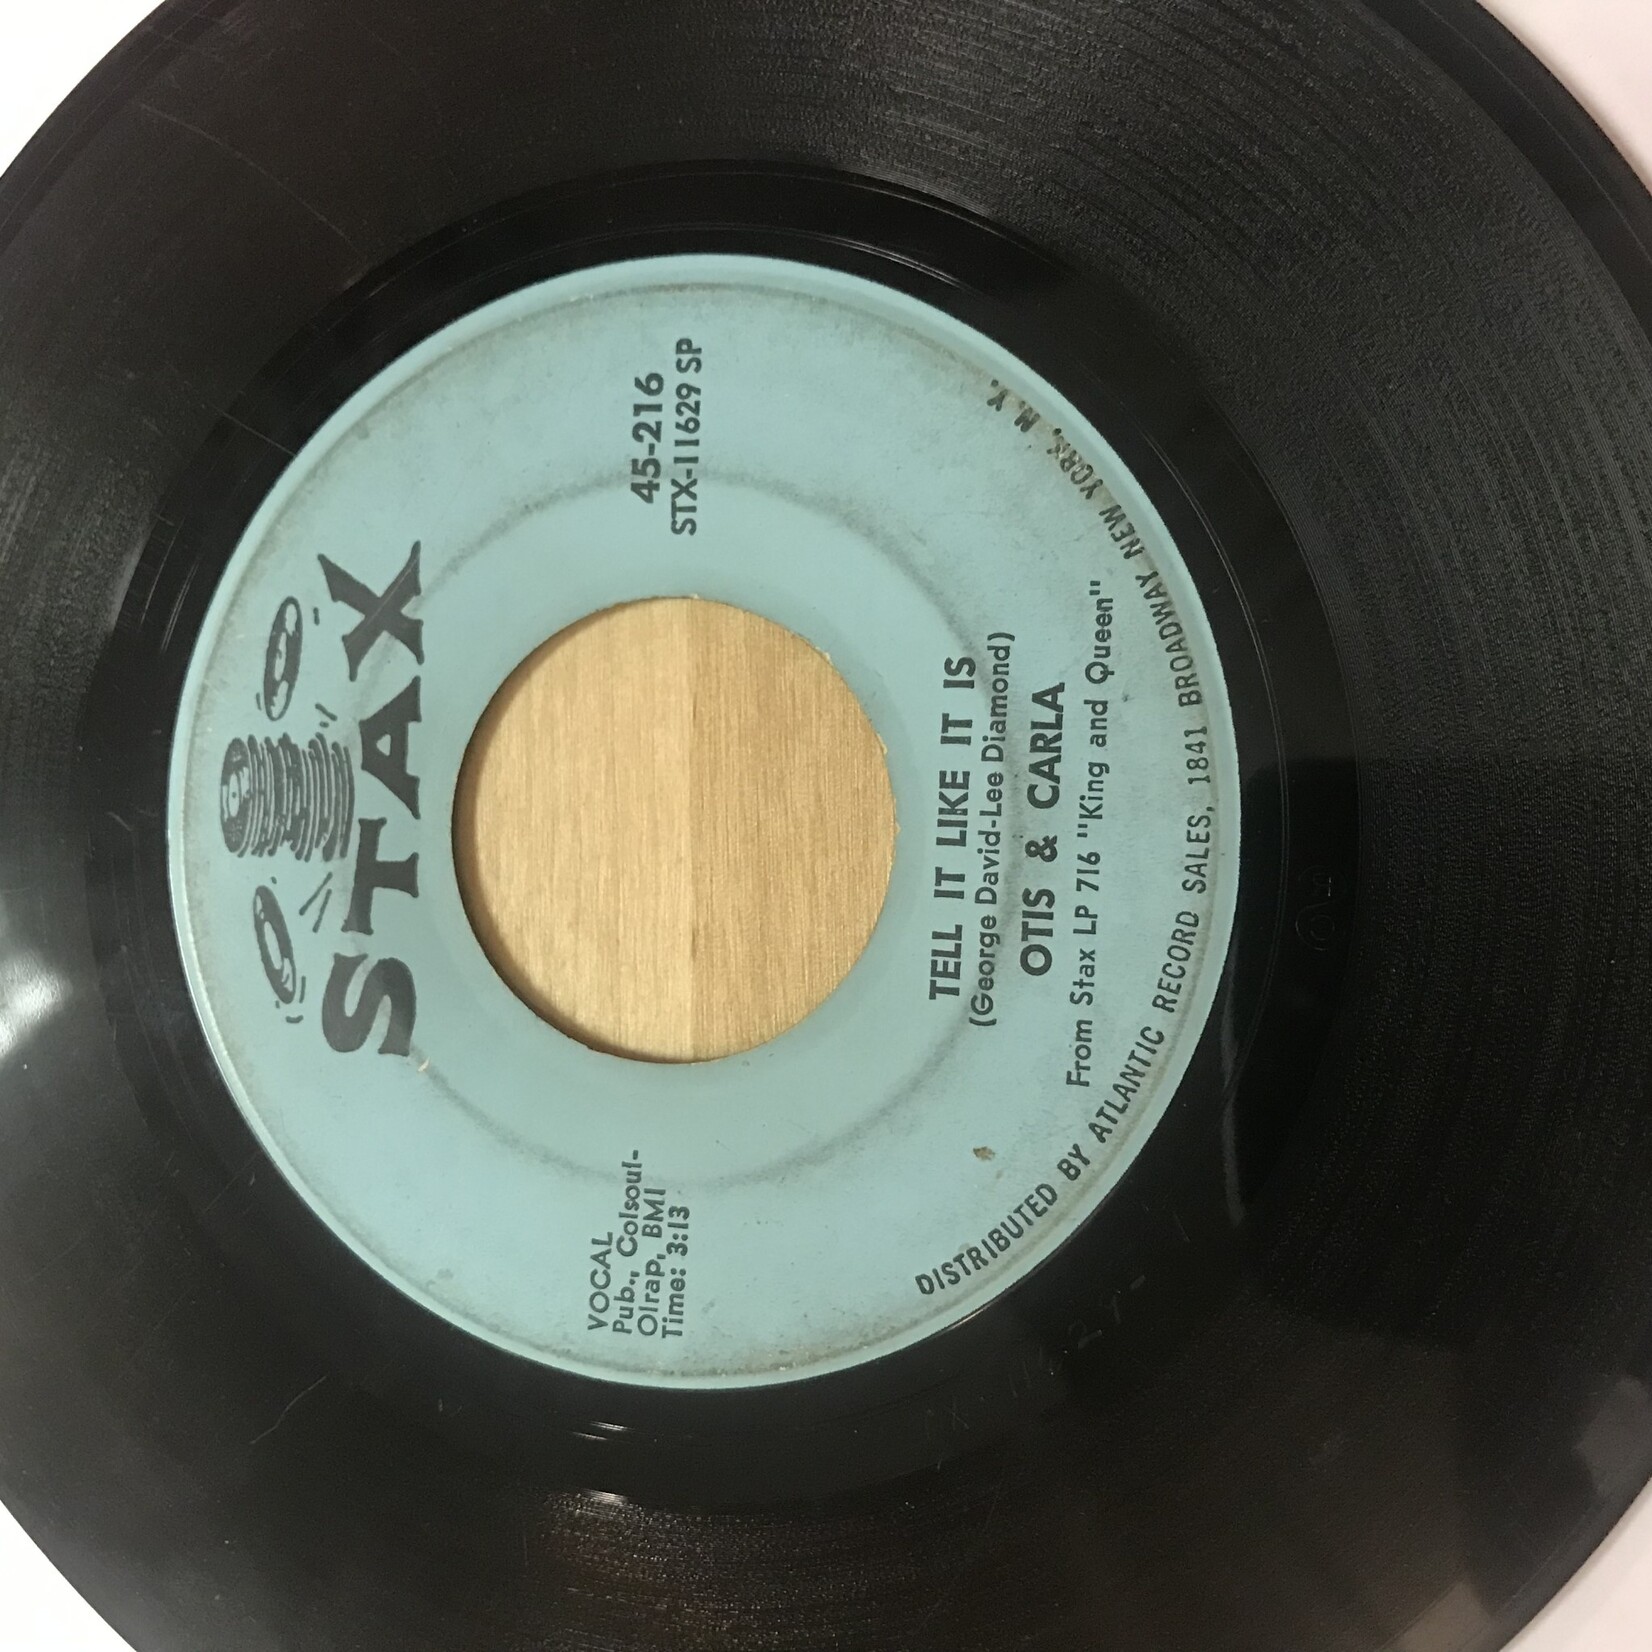 Otis & Carla (Otis Redding, Carla Thomas) - TRAMP / Tell It Like It Is - STX 11628 SP - Vinyl 45 (USED)